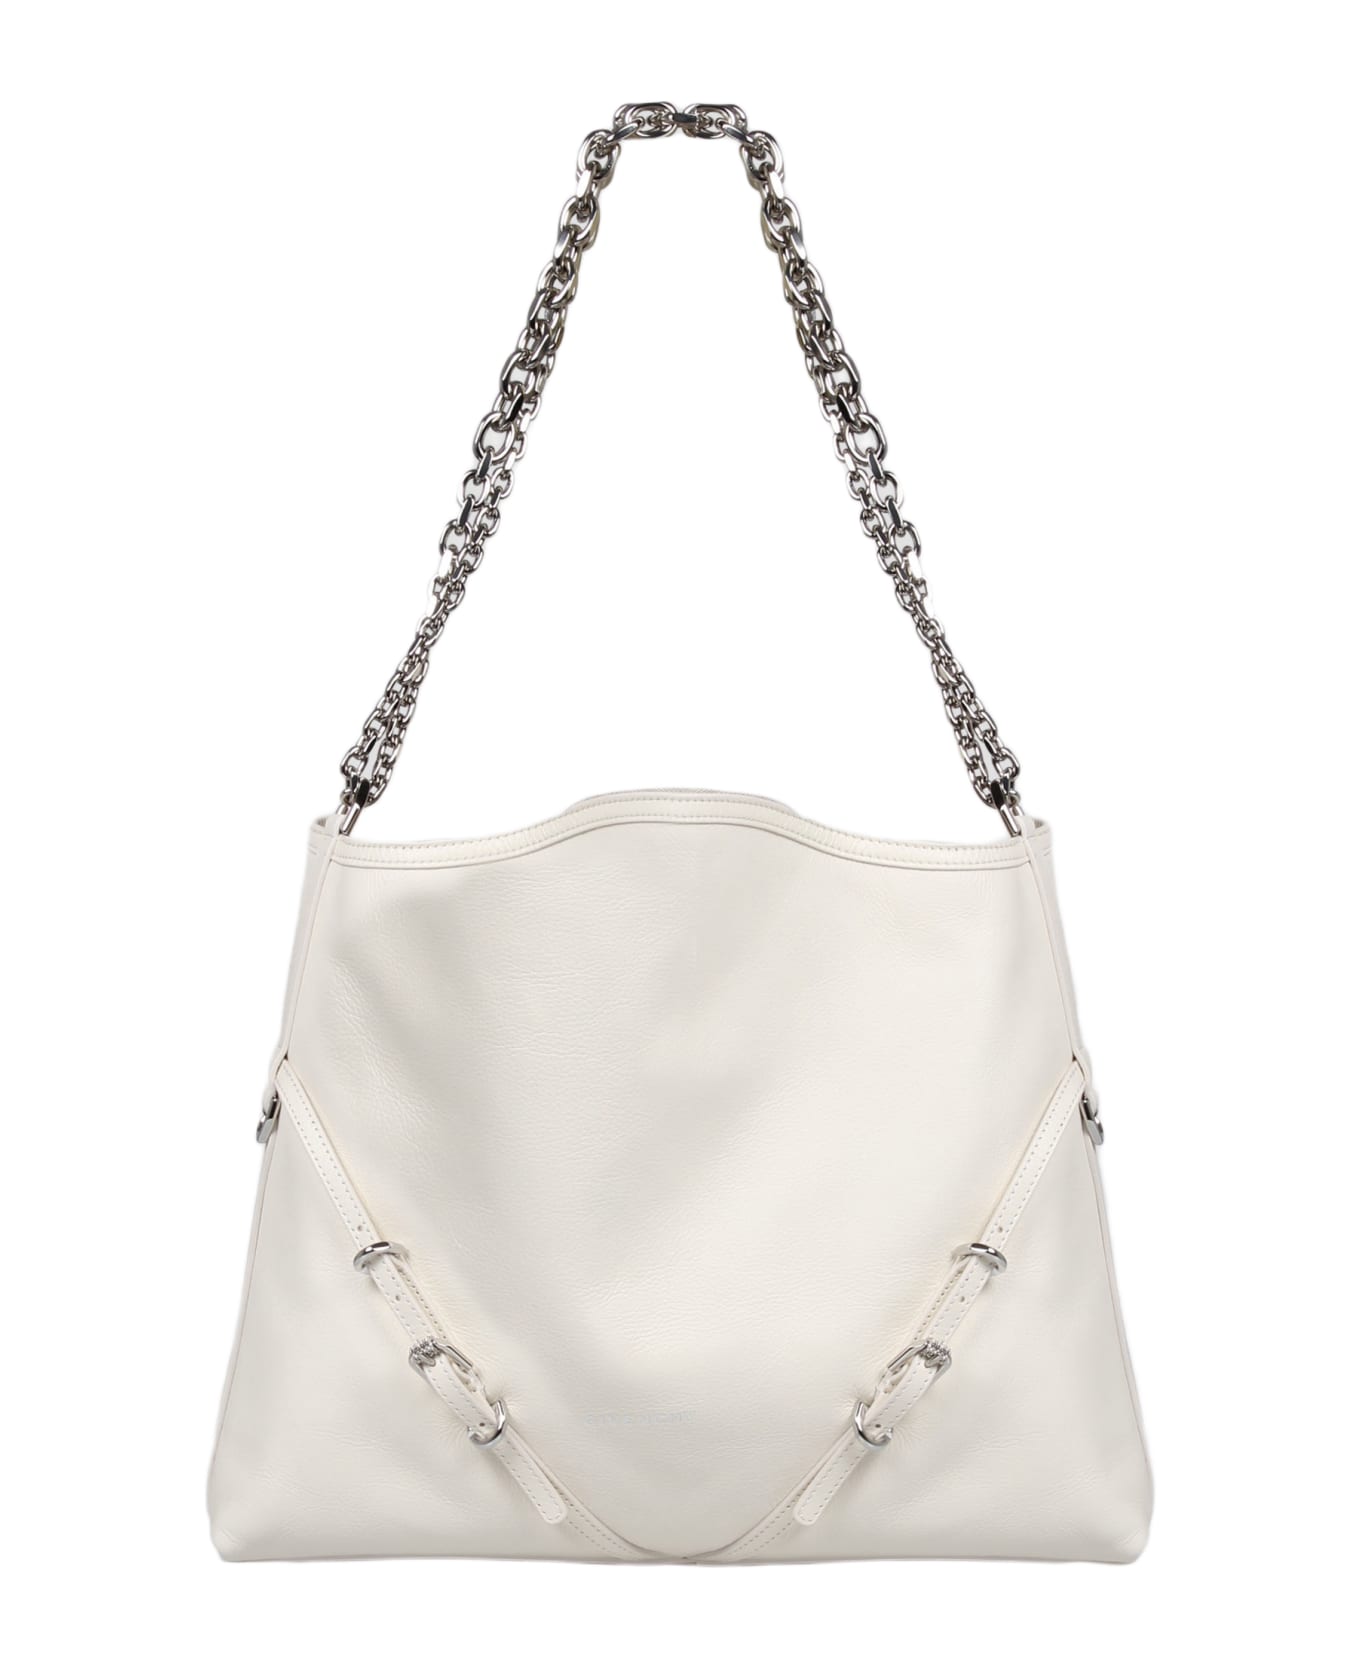 Givenchy Medium Voyou Chain Bag - White